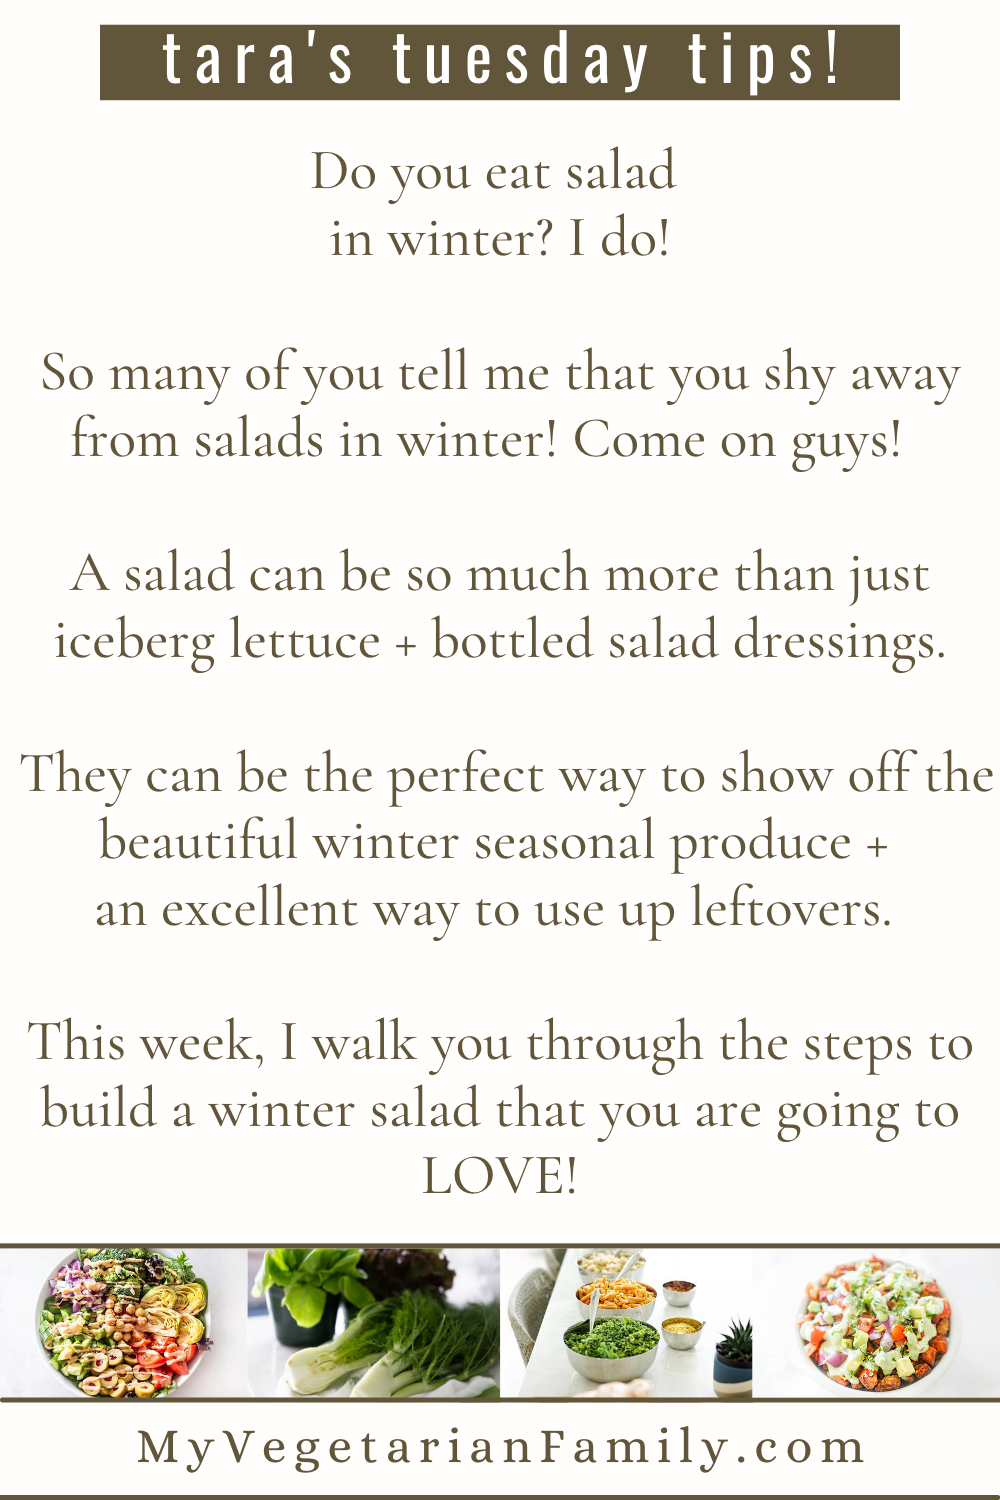 How To Build a Winter Salad | My Vegetarian Family | Tara's Tuesday Tips #wintersaladideas